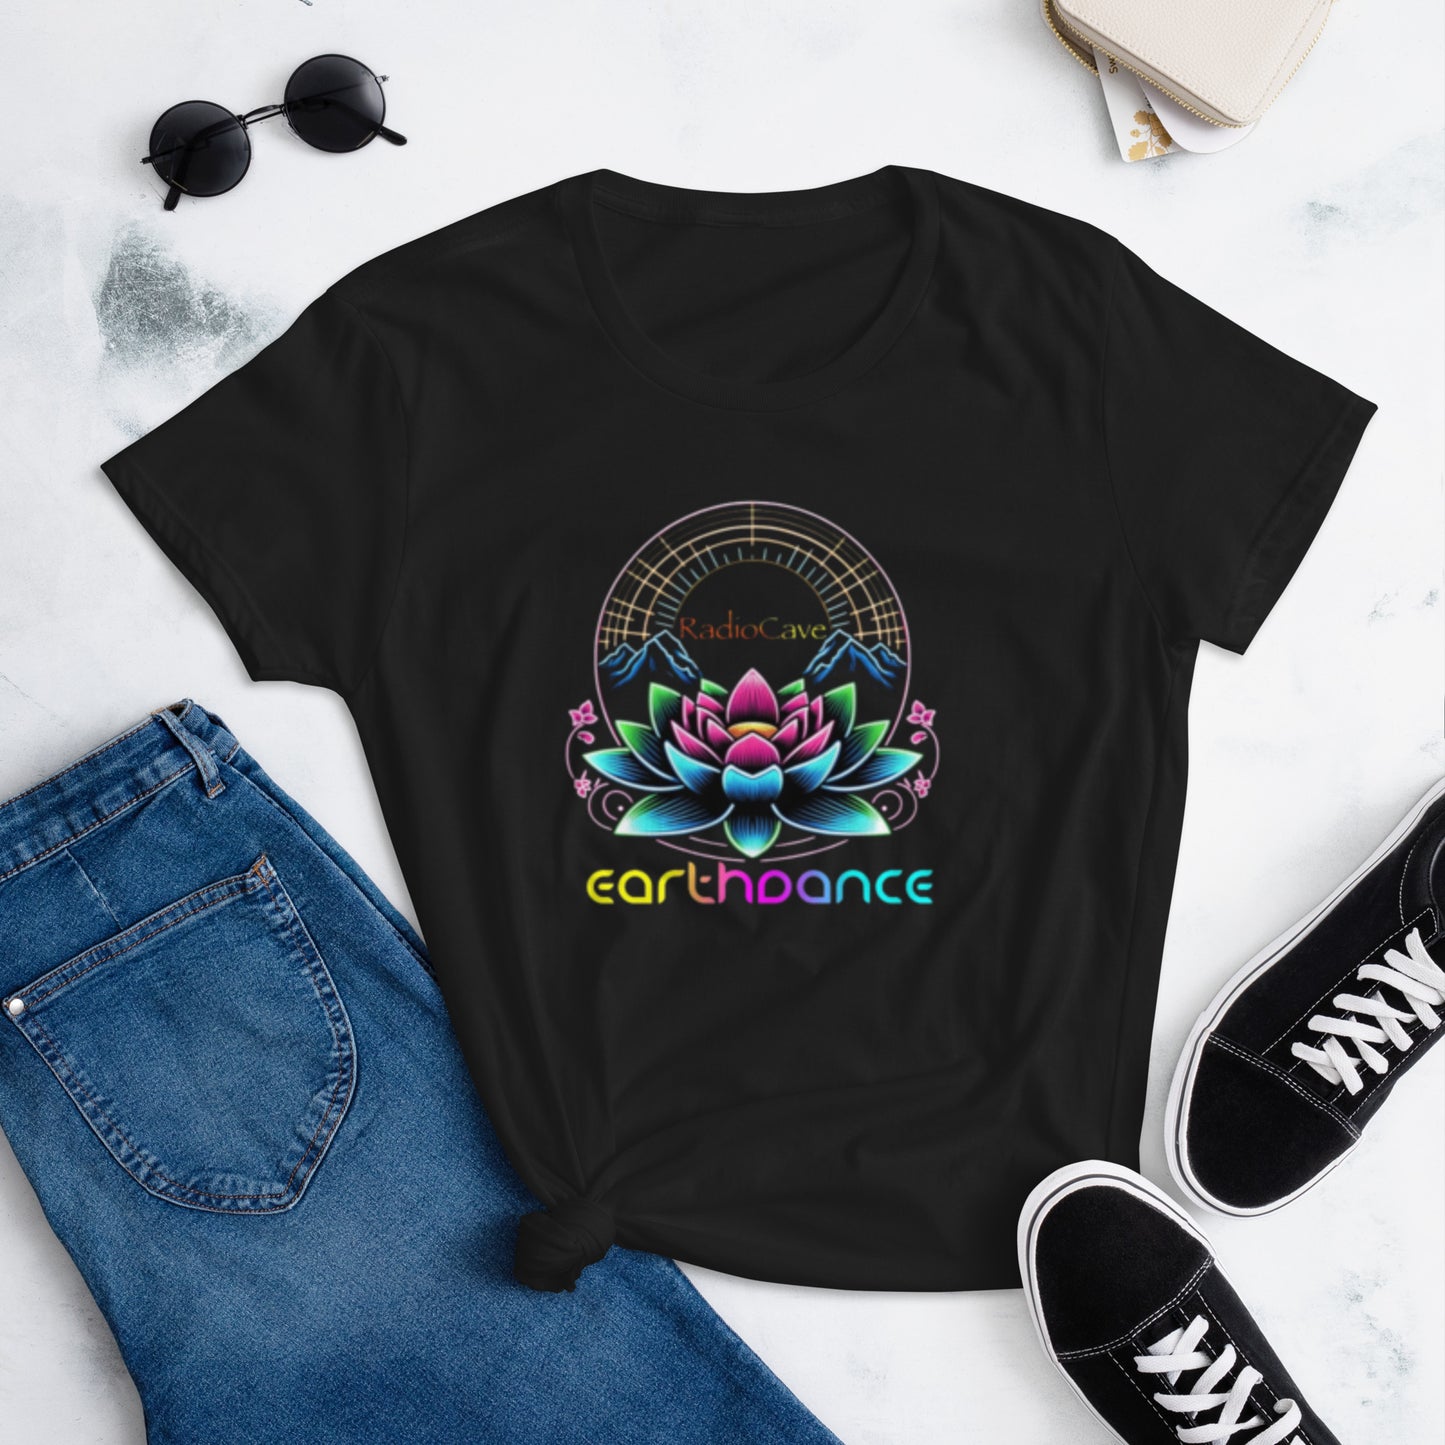 Earthdance RadioCave Women's Short Sleeve T-Shirt